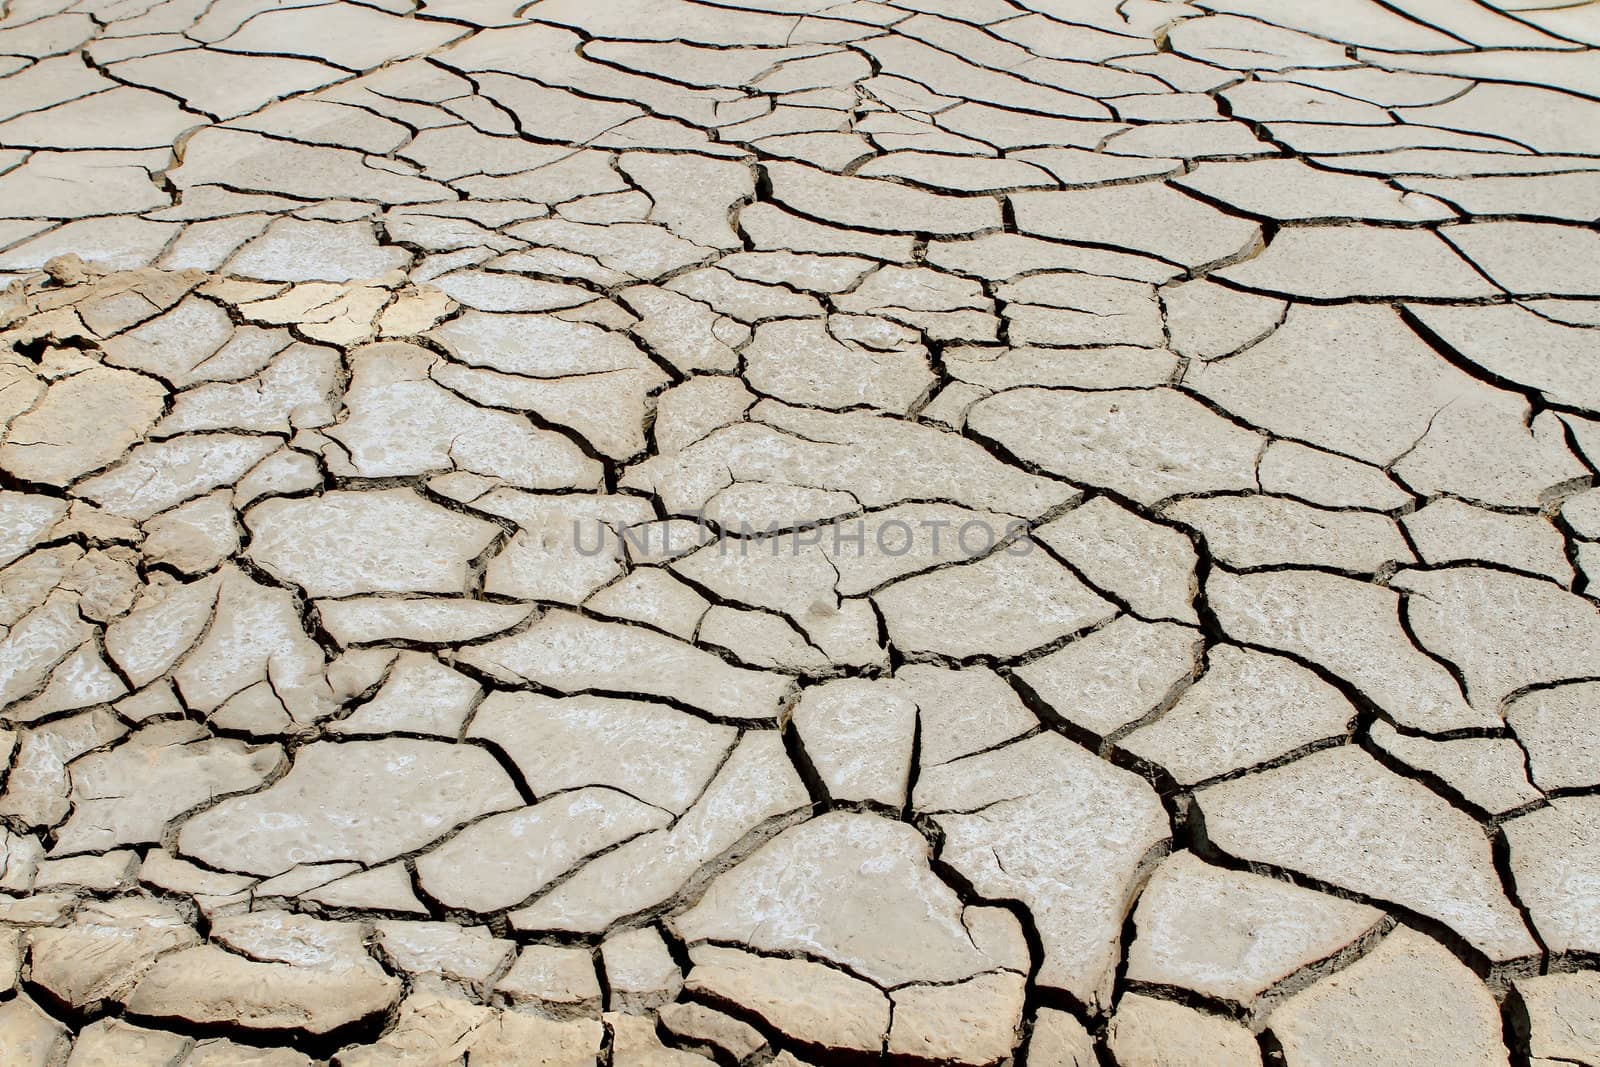 Dry soil in arid areas